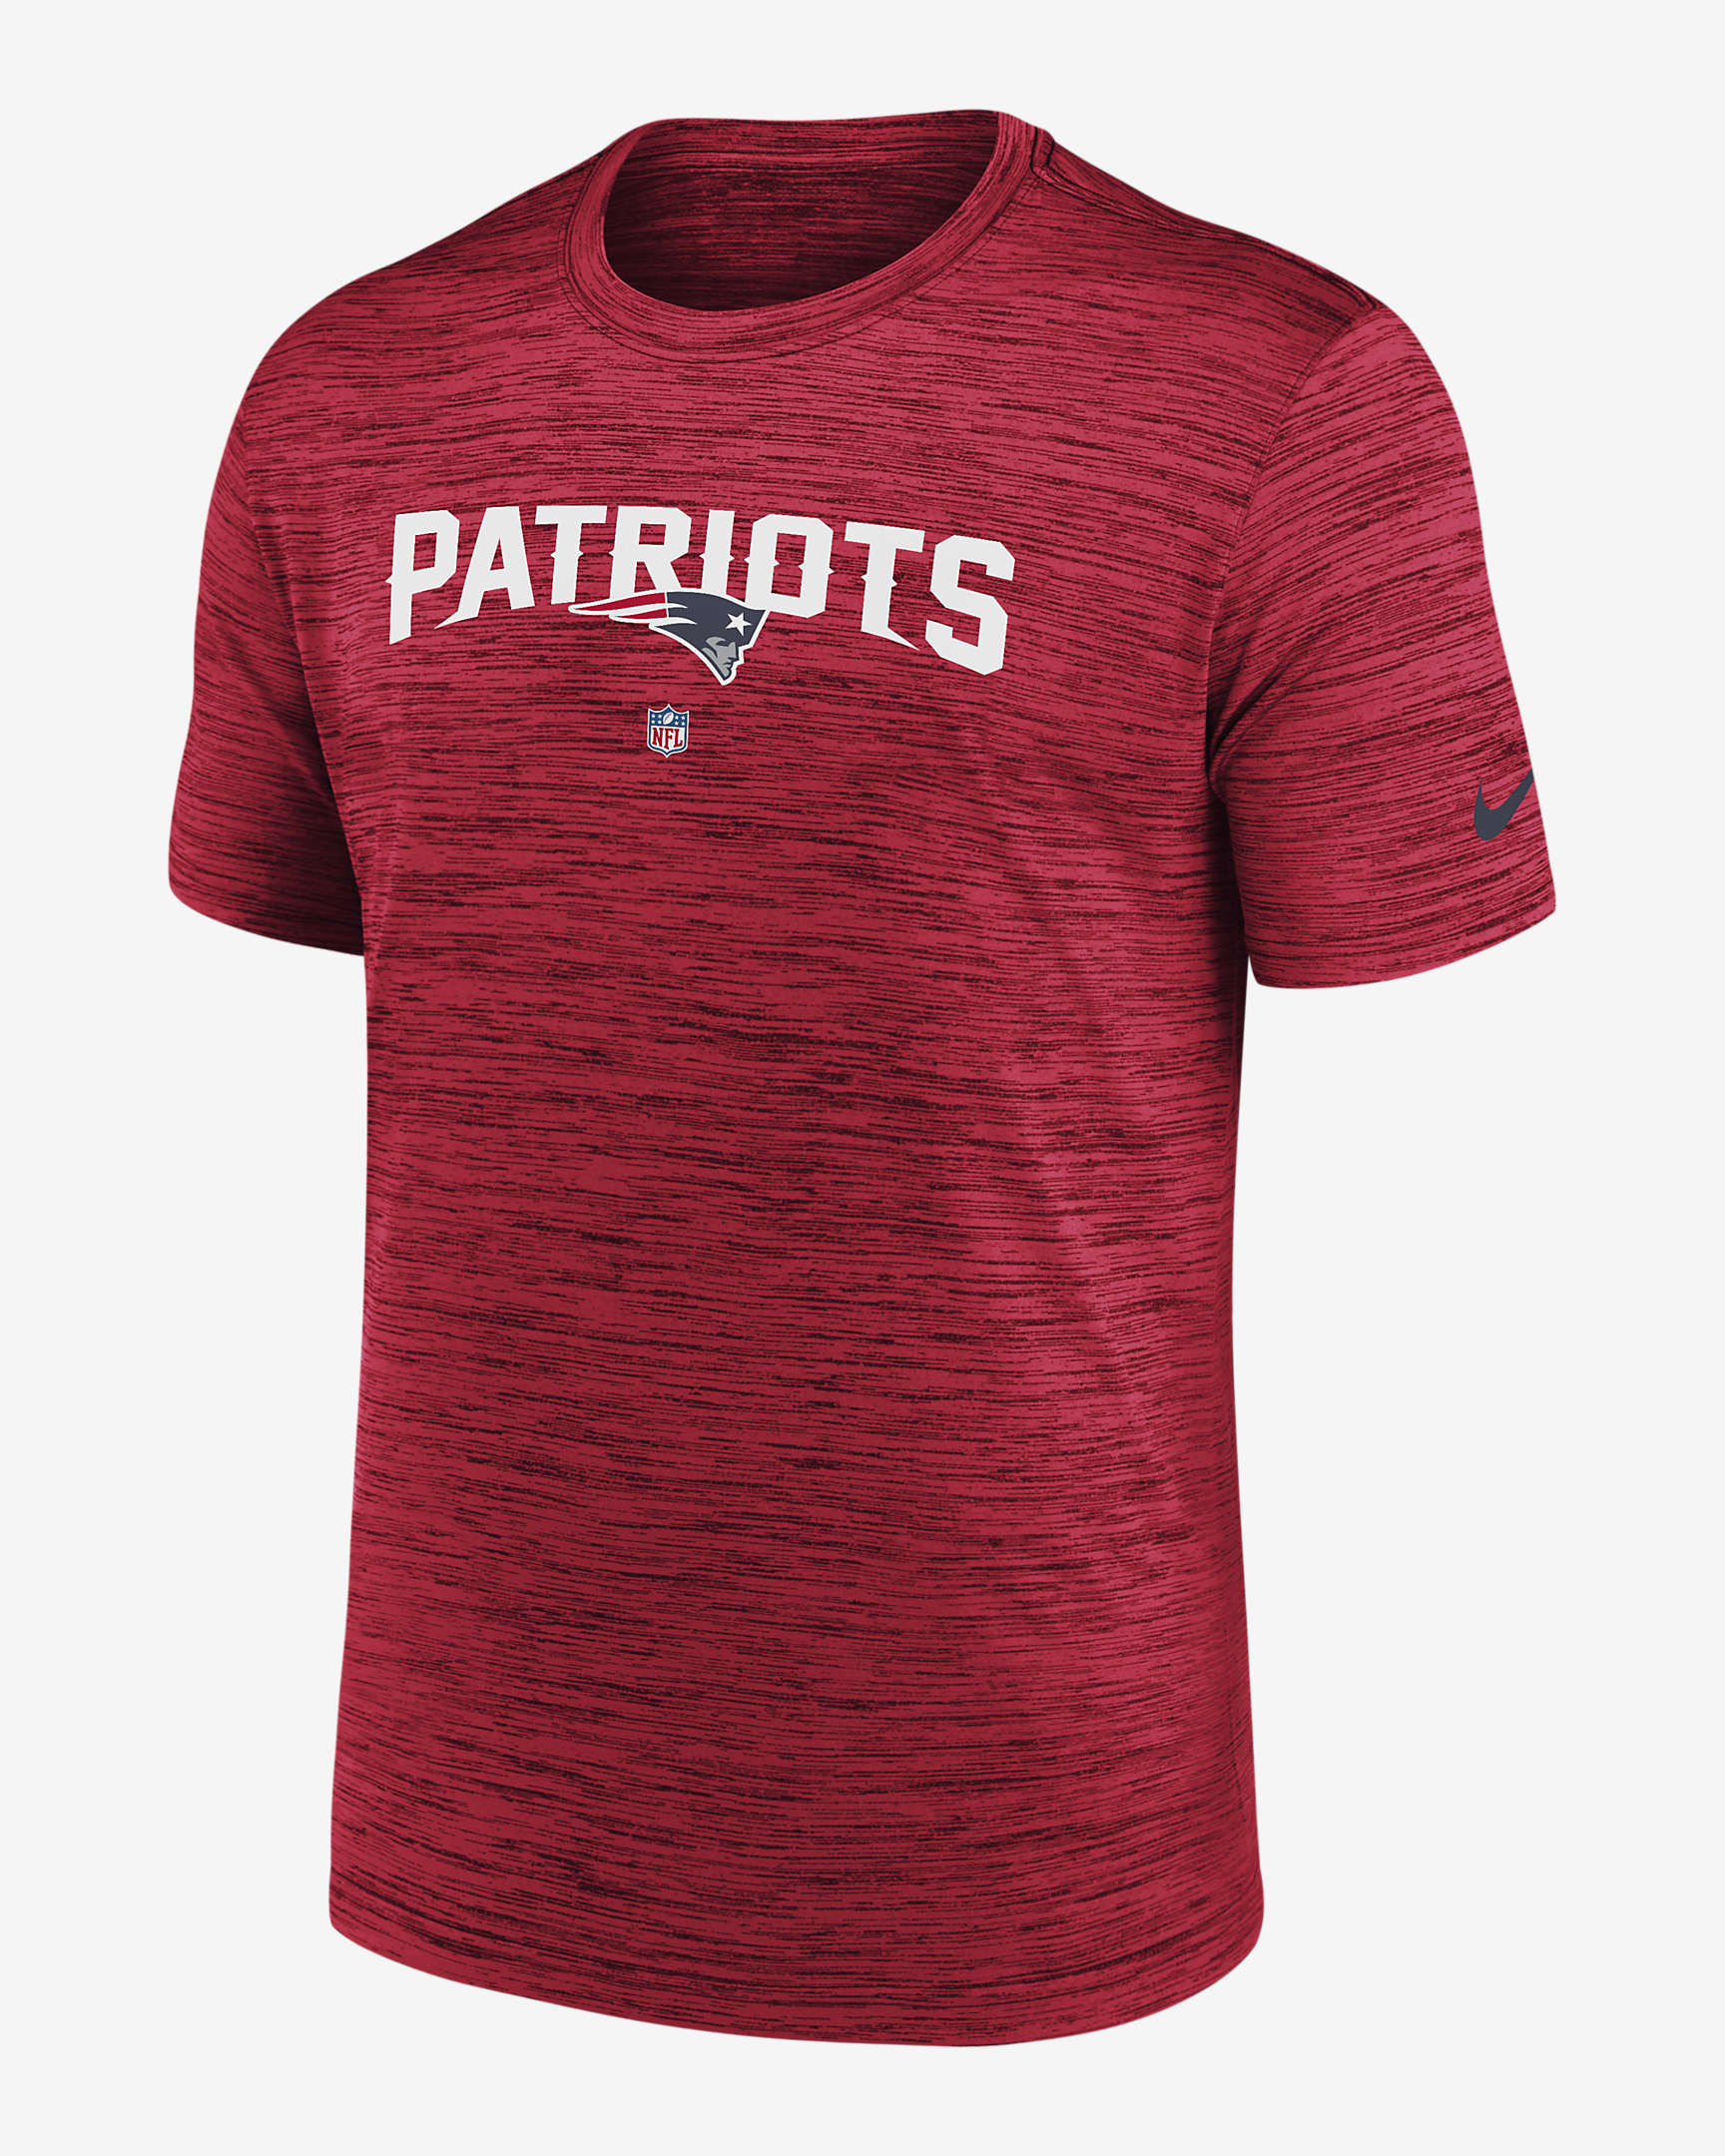 Nike Dri-FIT Sideline Velocity (NFL New England Patriots) Men's T-Shirt ...